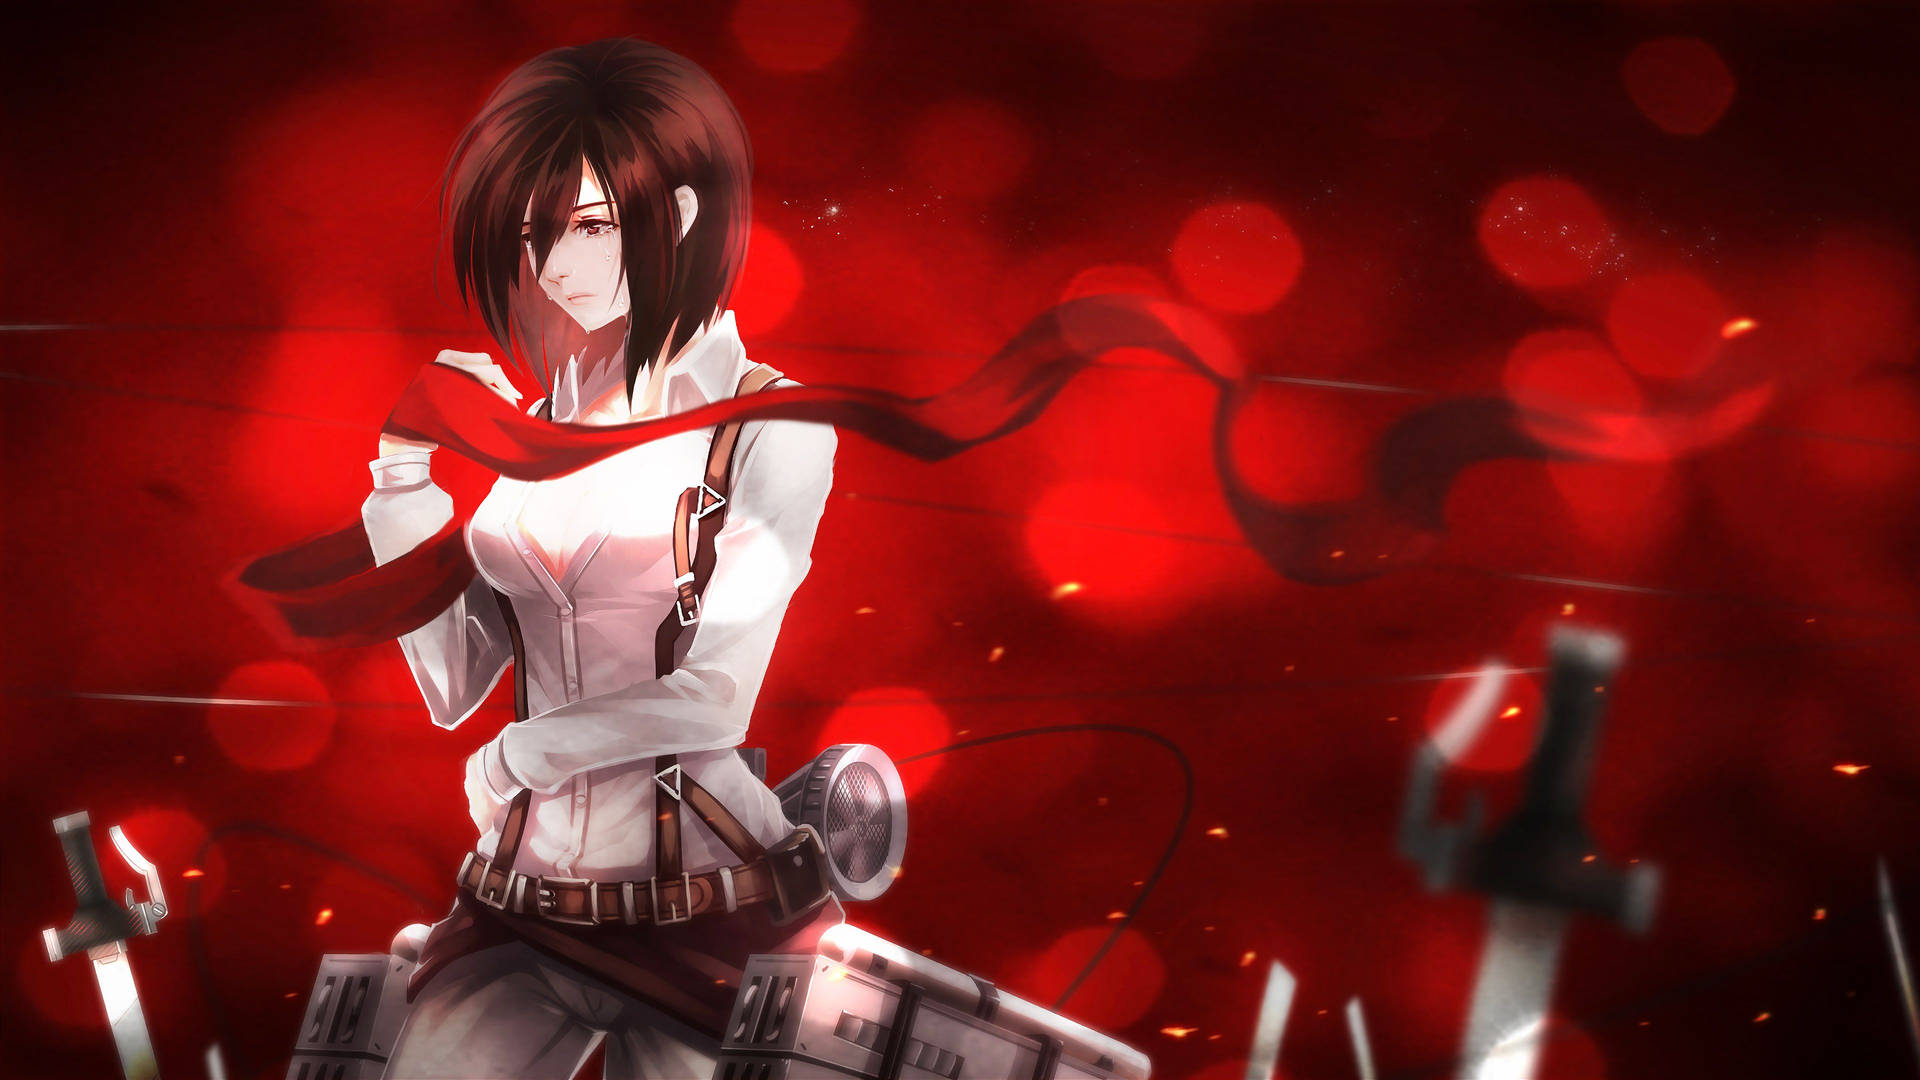 Red Attack On Titan Season 4 Mikasa Wallpaper